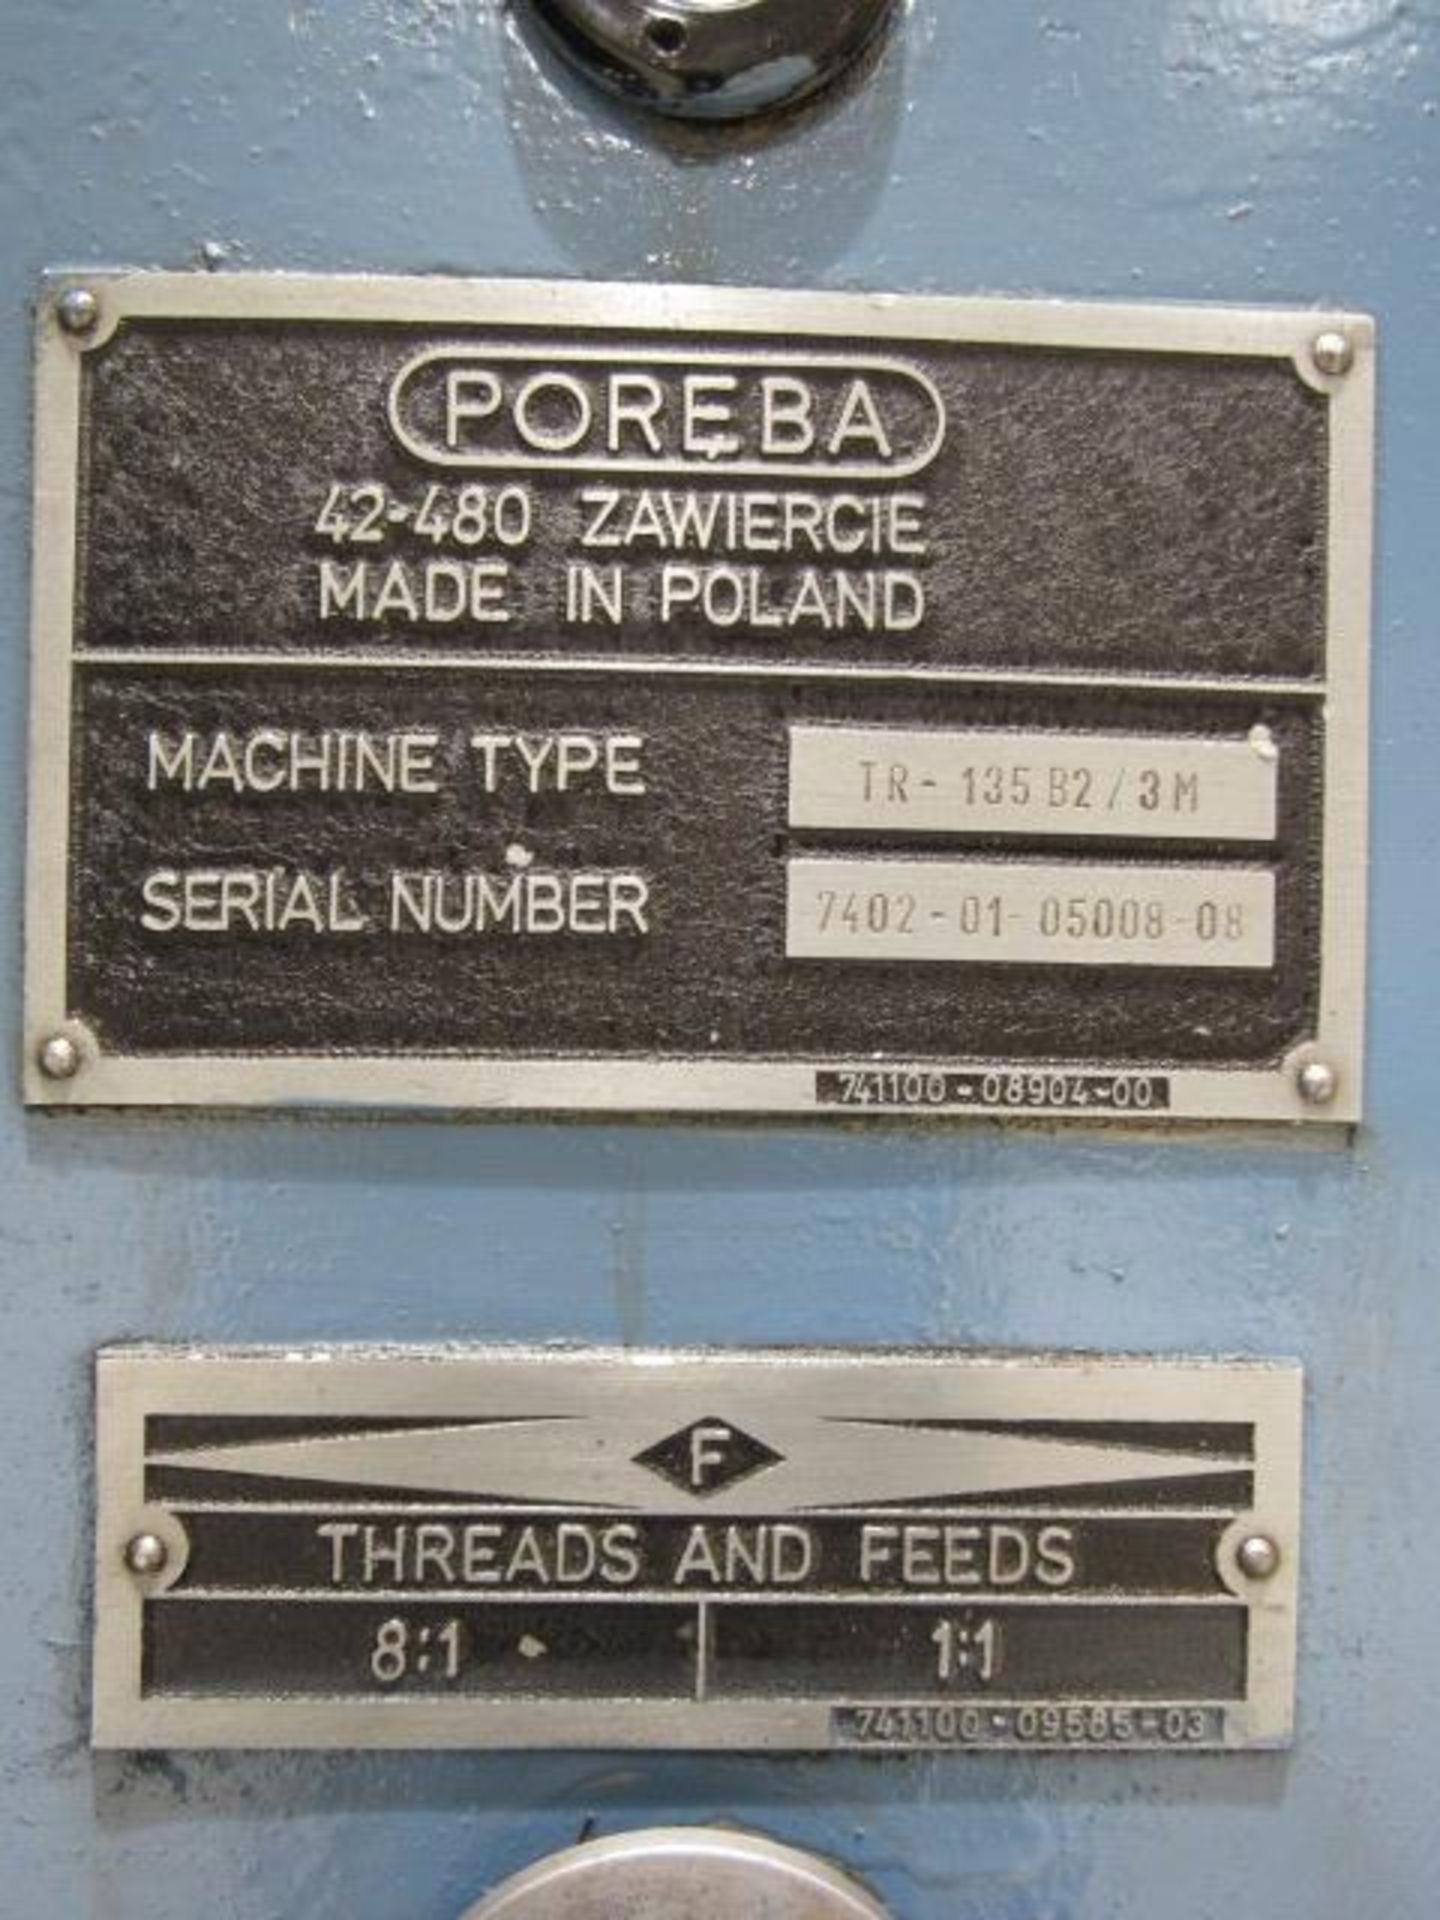 Poreba TR-135 B2/3M Gap Bed Engine Lathe - Image 9 of 9